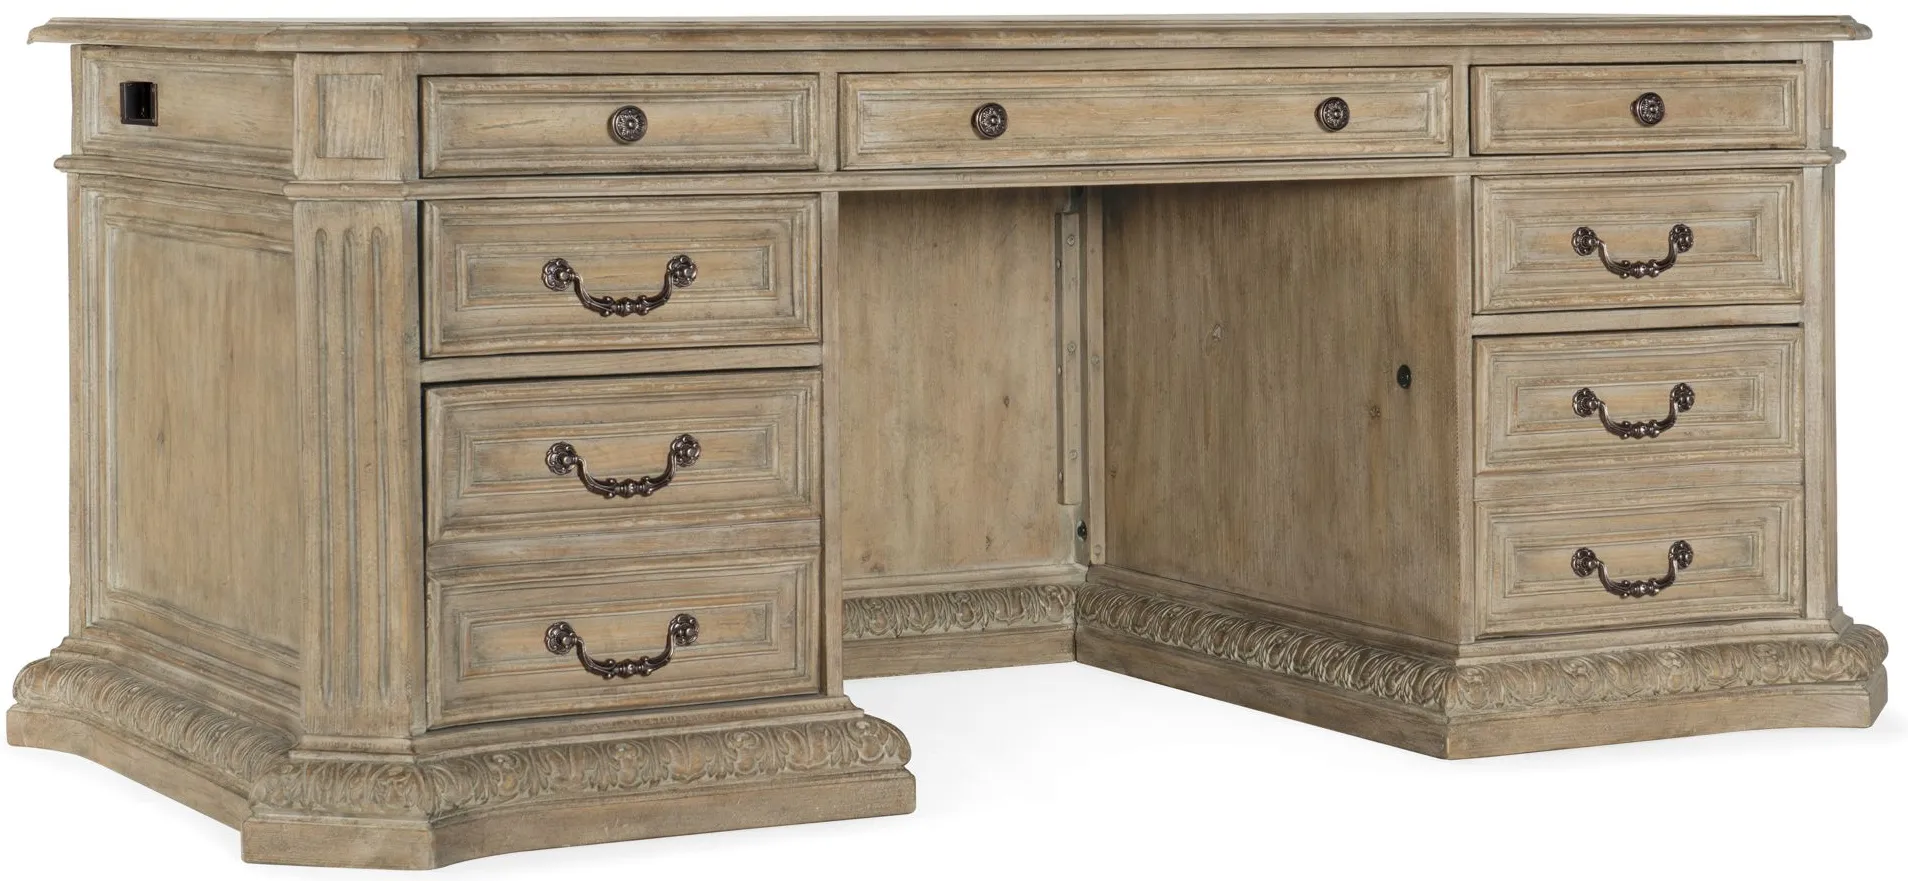 Castella Executive Desk in Antique Slate by Hooker Furniture